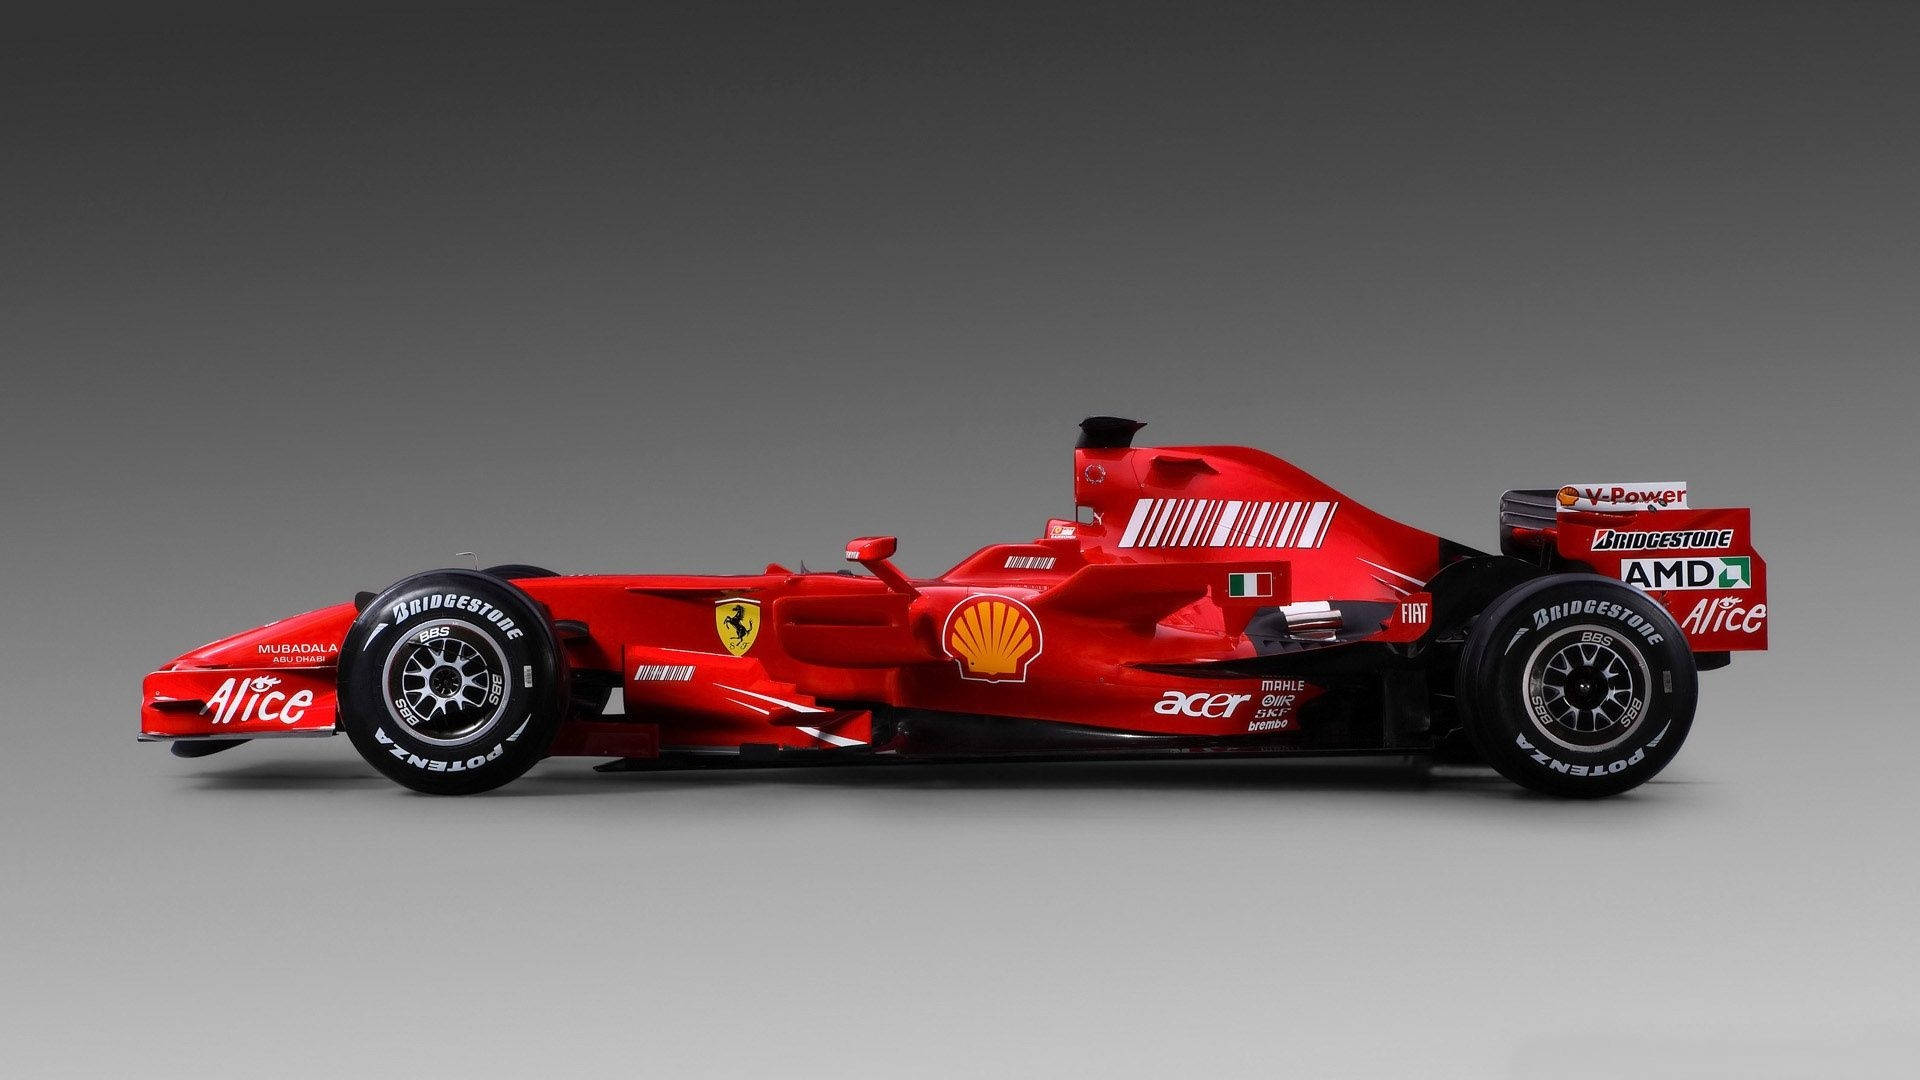 Ferrarif1-wagen Hintergrundbild Wallpaper